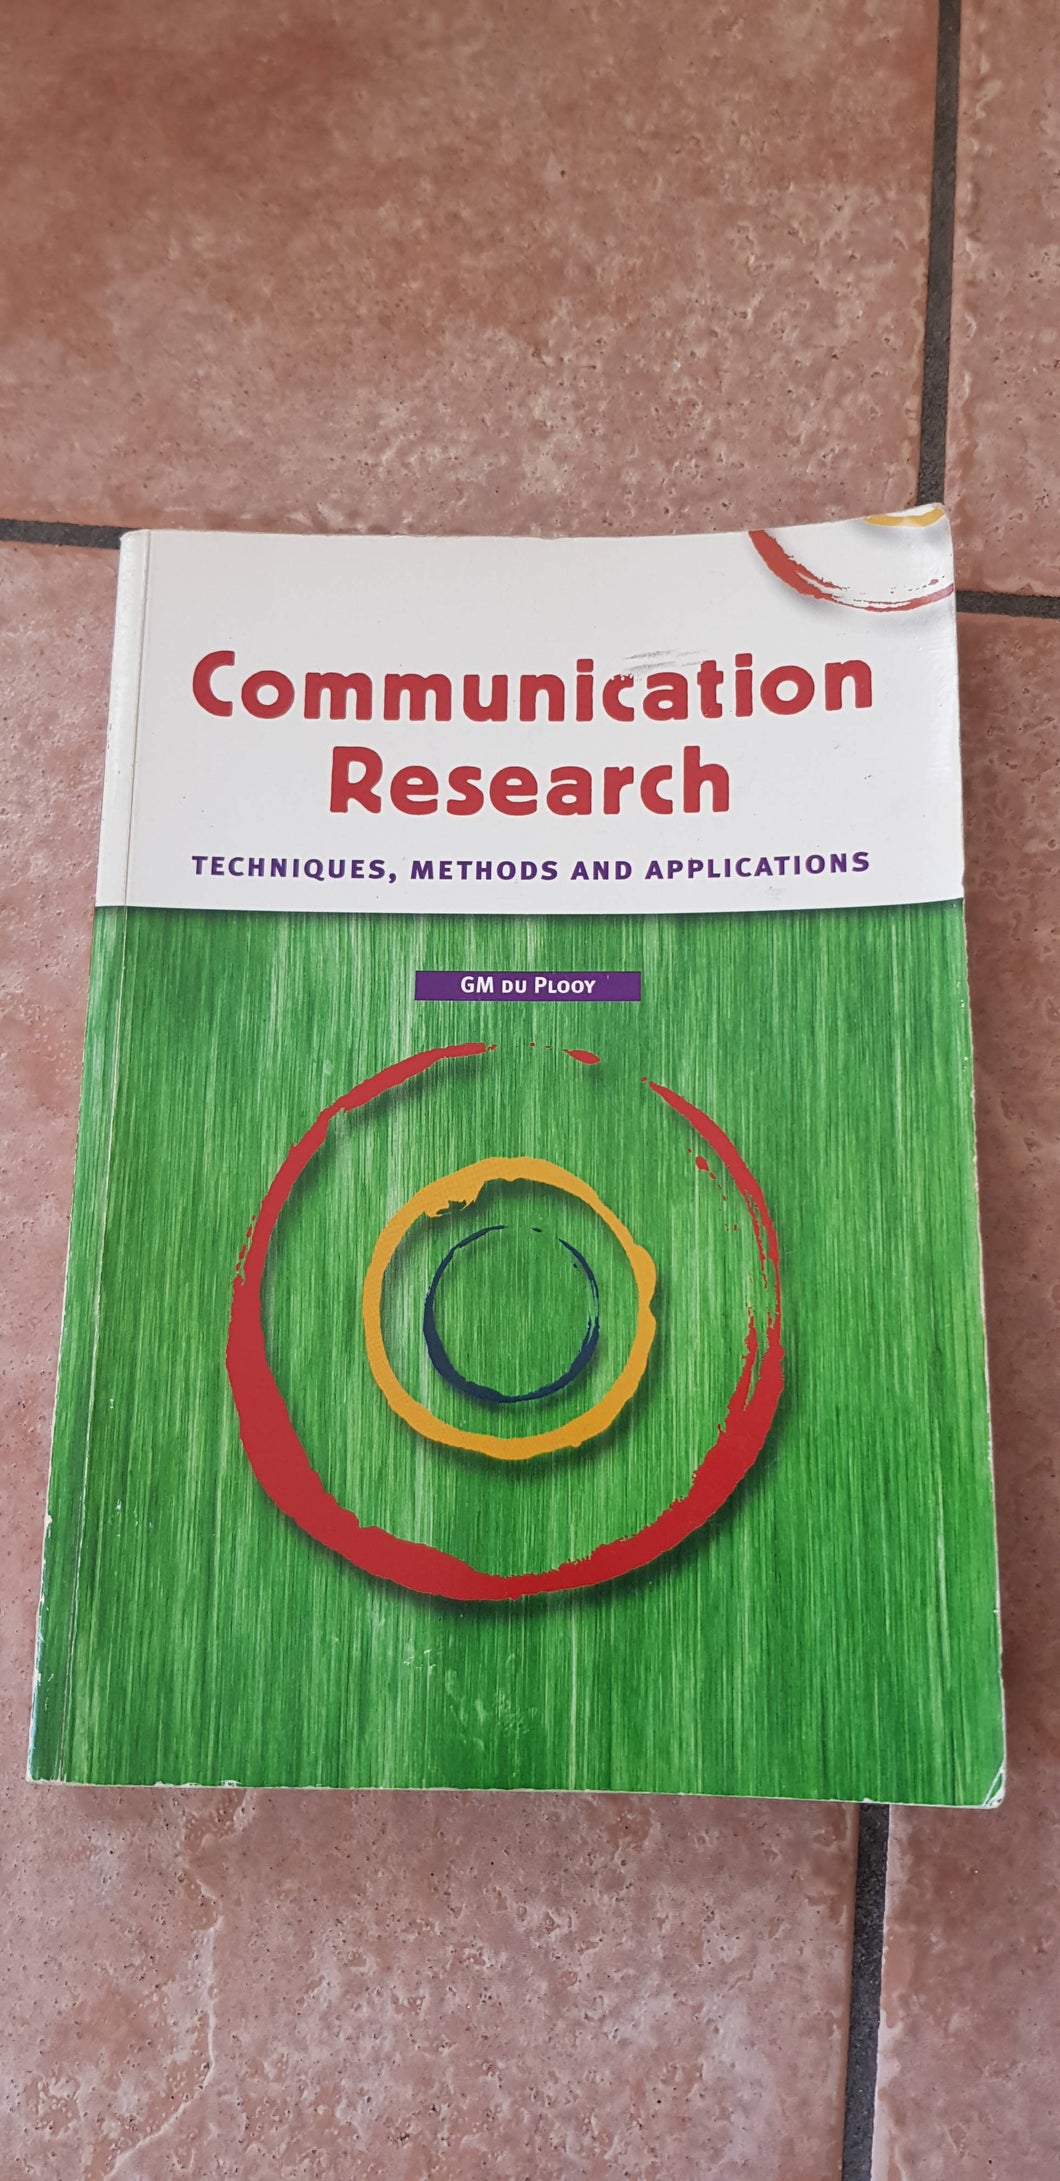 Communication research